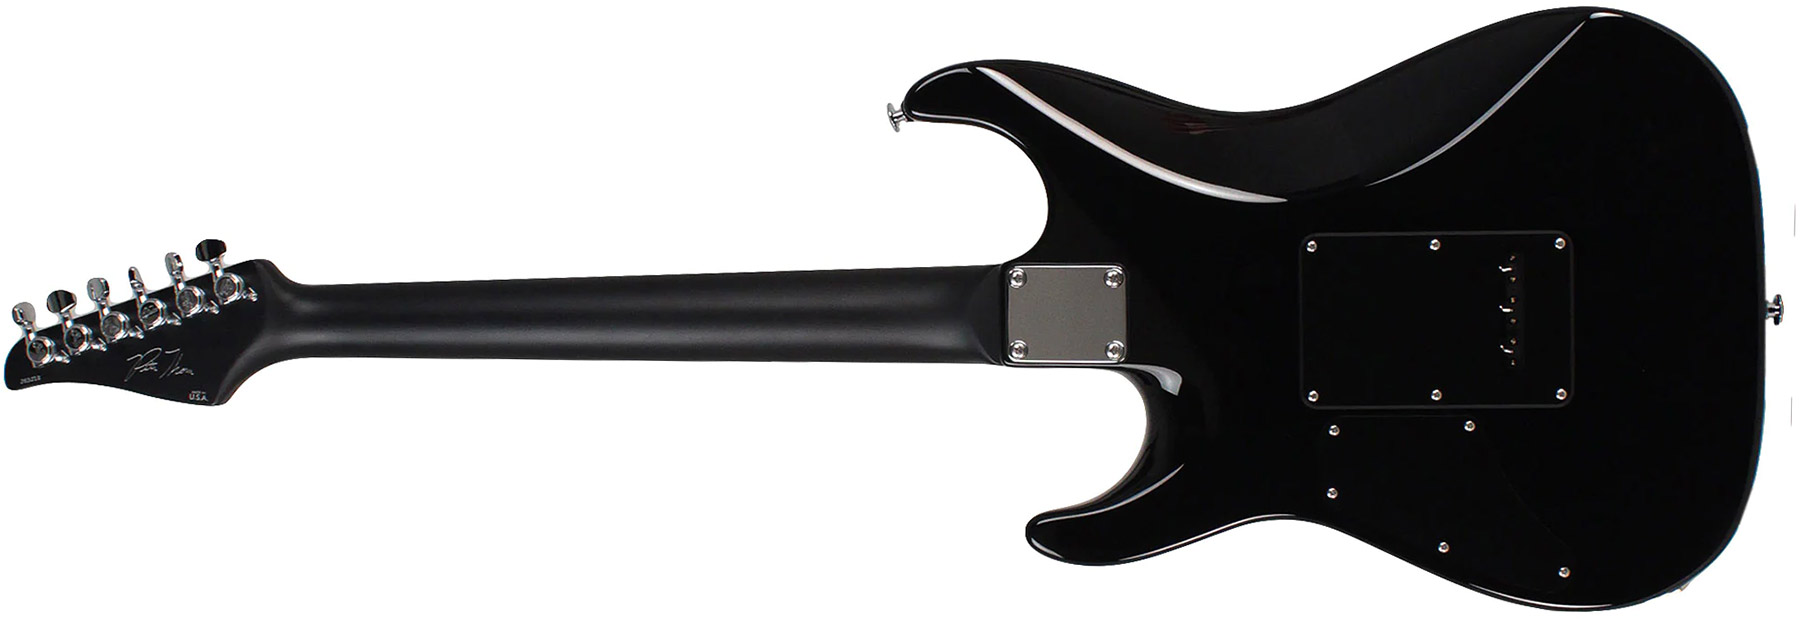 Suhr Pete Thorn Standard 01-sig-0012 Signature 2h Trem Rw - Ocean Turquoise Metallic - E-Gitarre in Str-Form - Variation 1